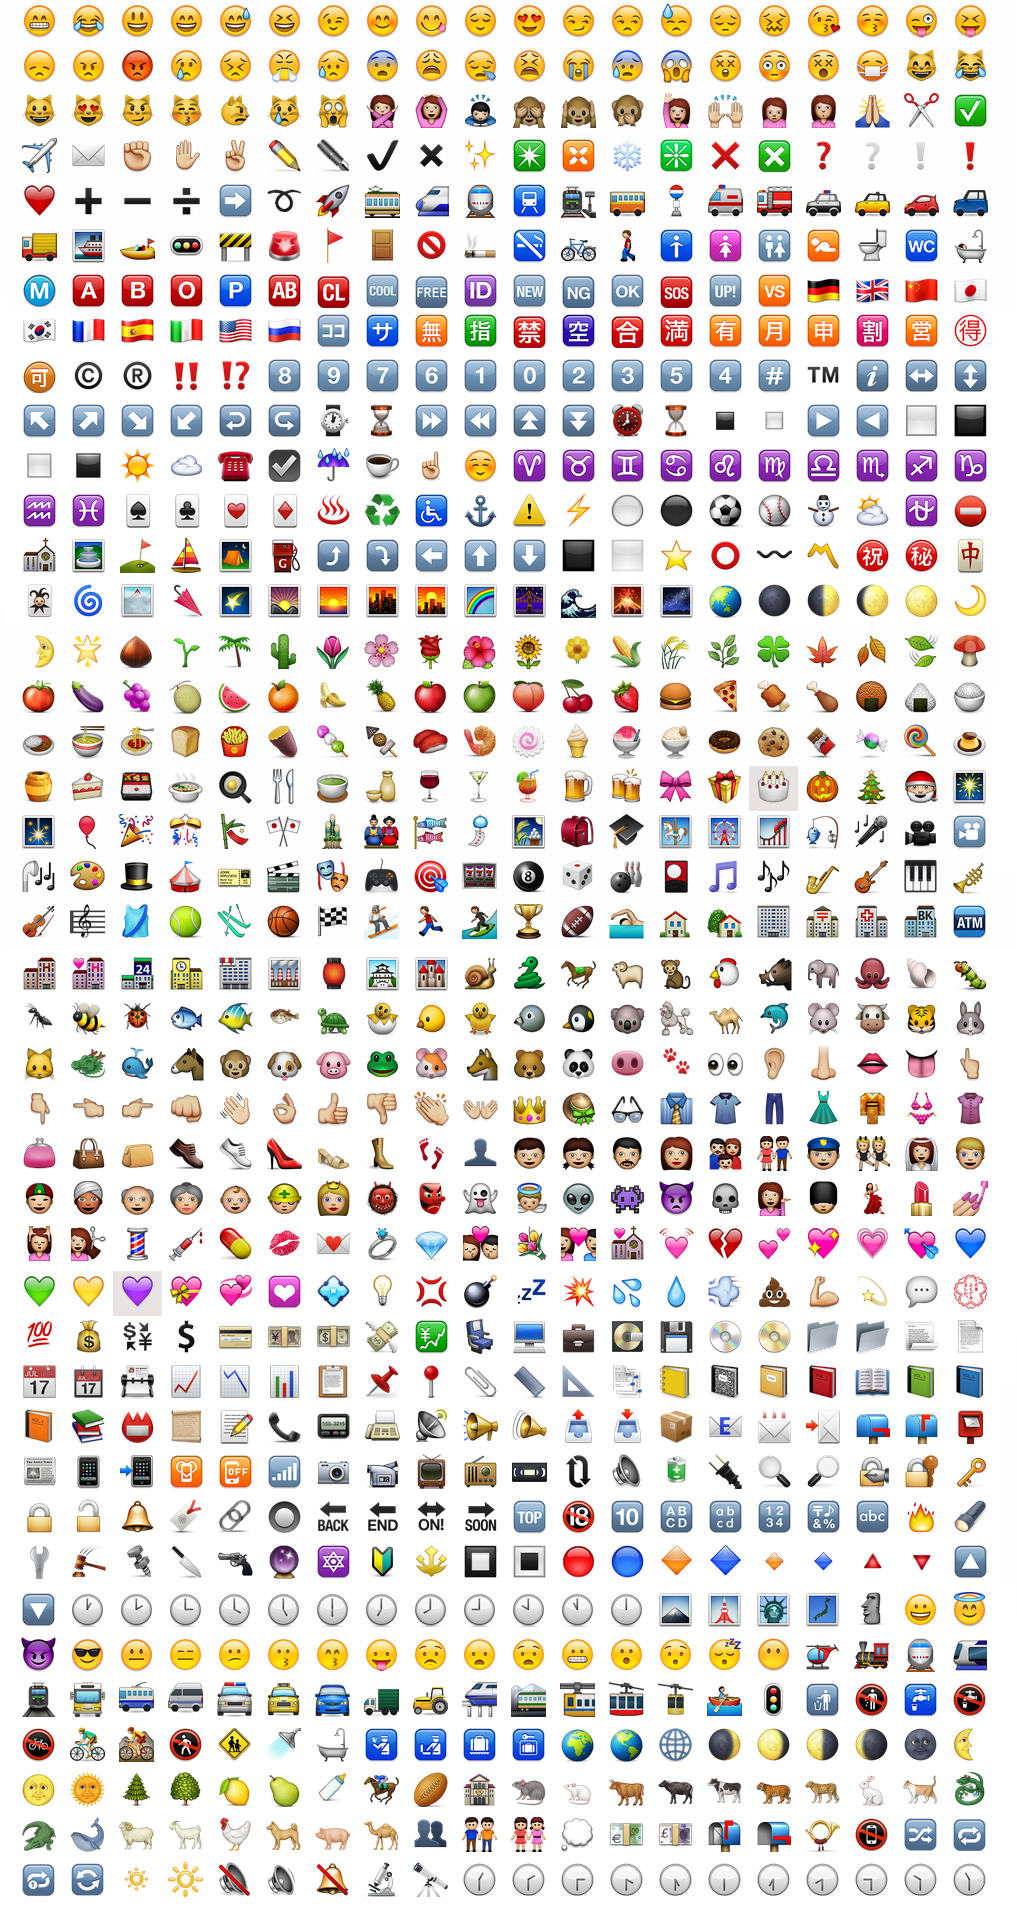 Single Emojis Wele To Beautiful Image Gallery